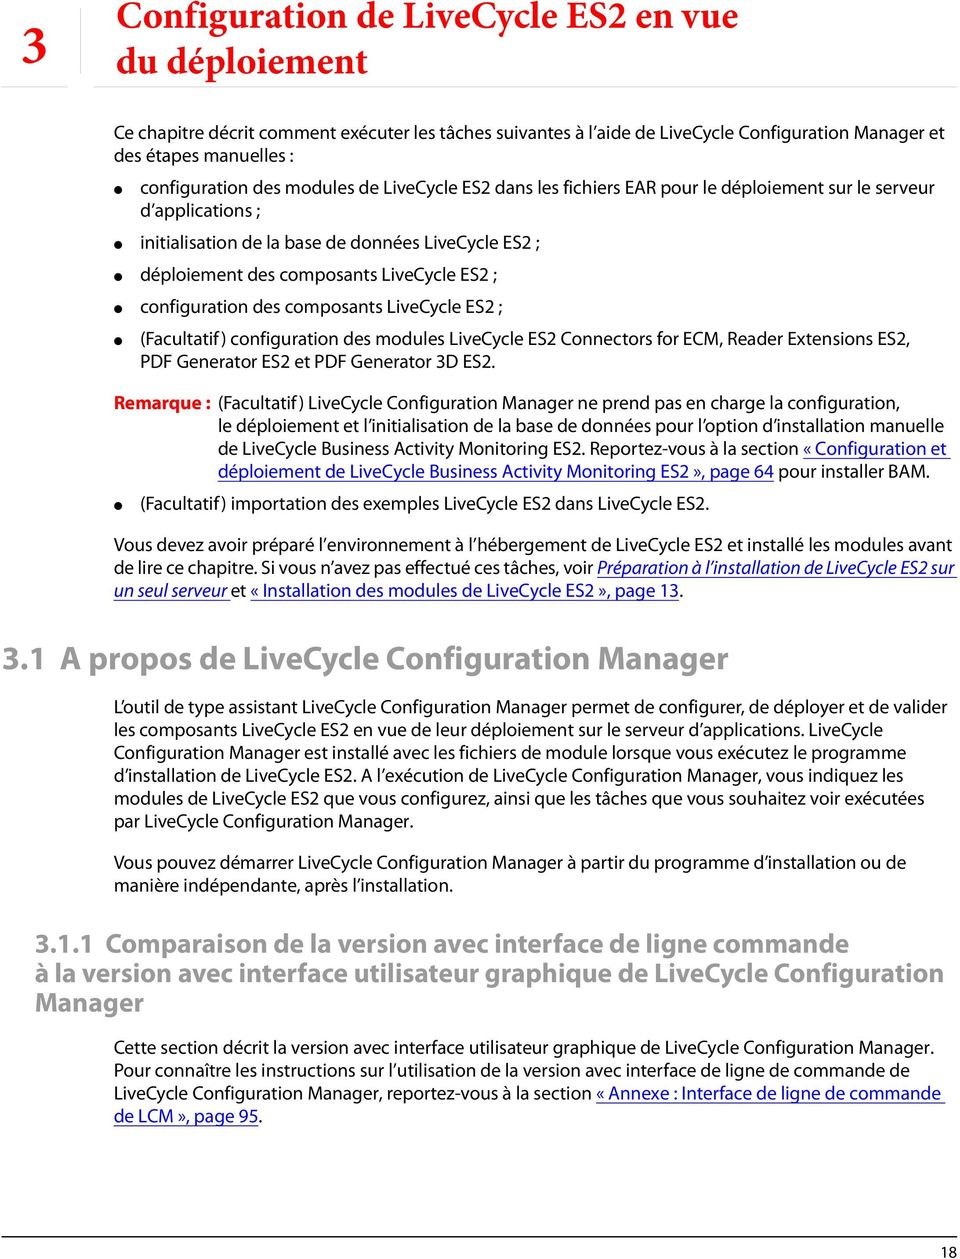 configuration des composants LiveCycle ES2 ; (Facultatif) configuration des modules LiveCycle ES2 Connectors for ECM, Reader Extensions ES2, PDF Generator ES2 et PDF Generator 3D ES2.